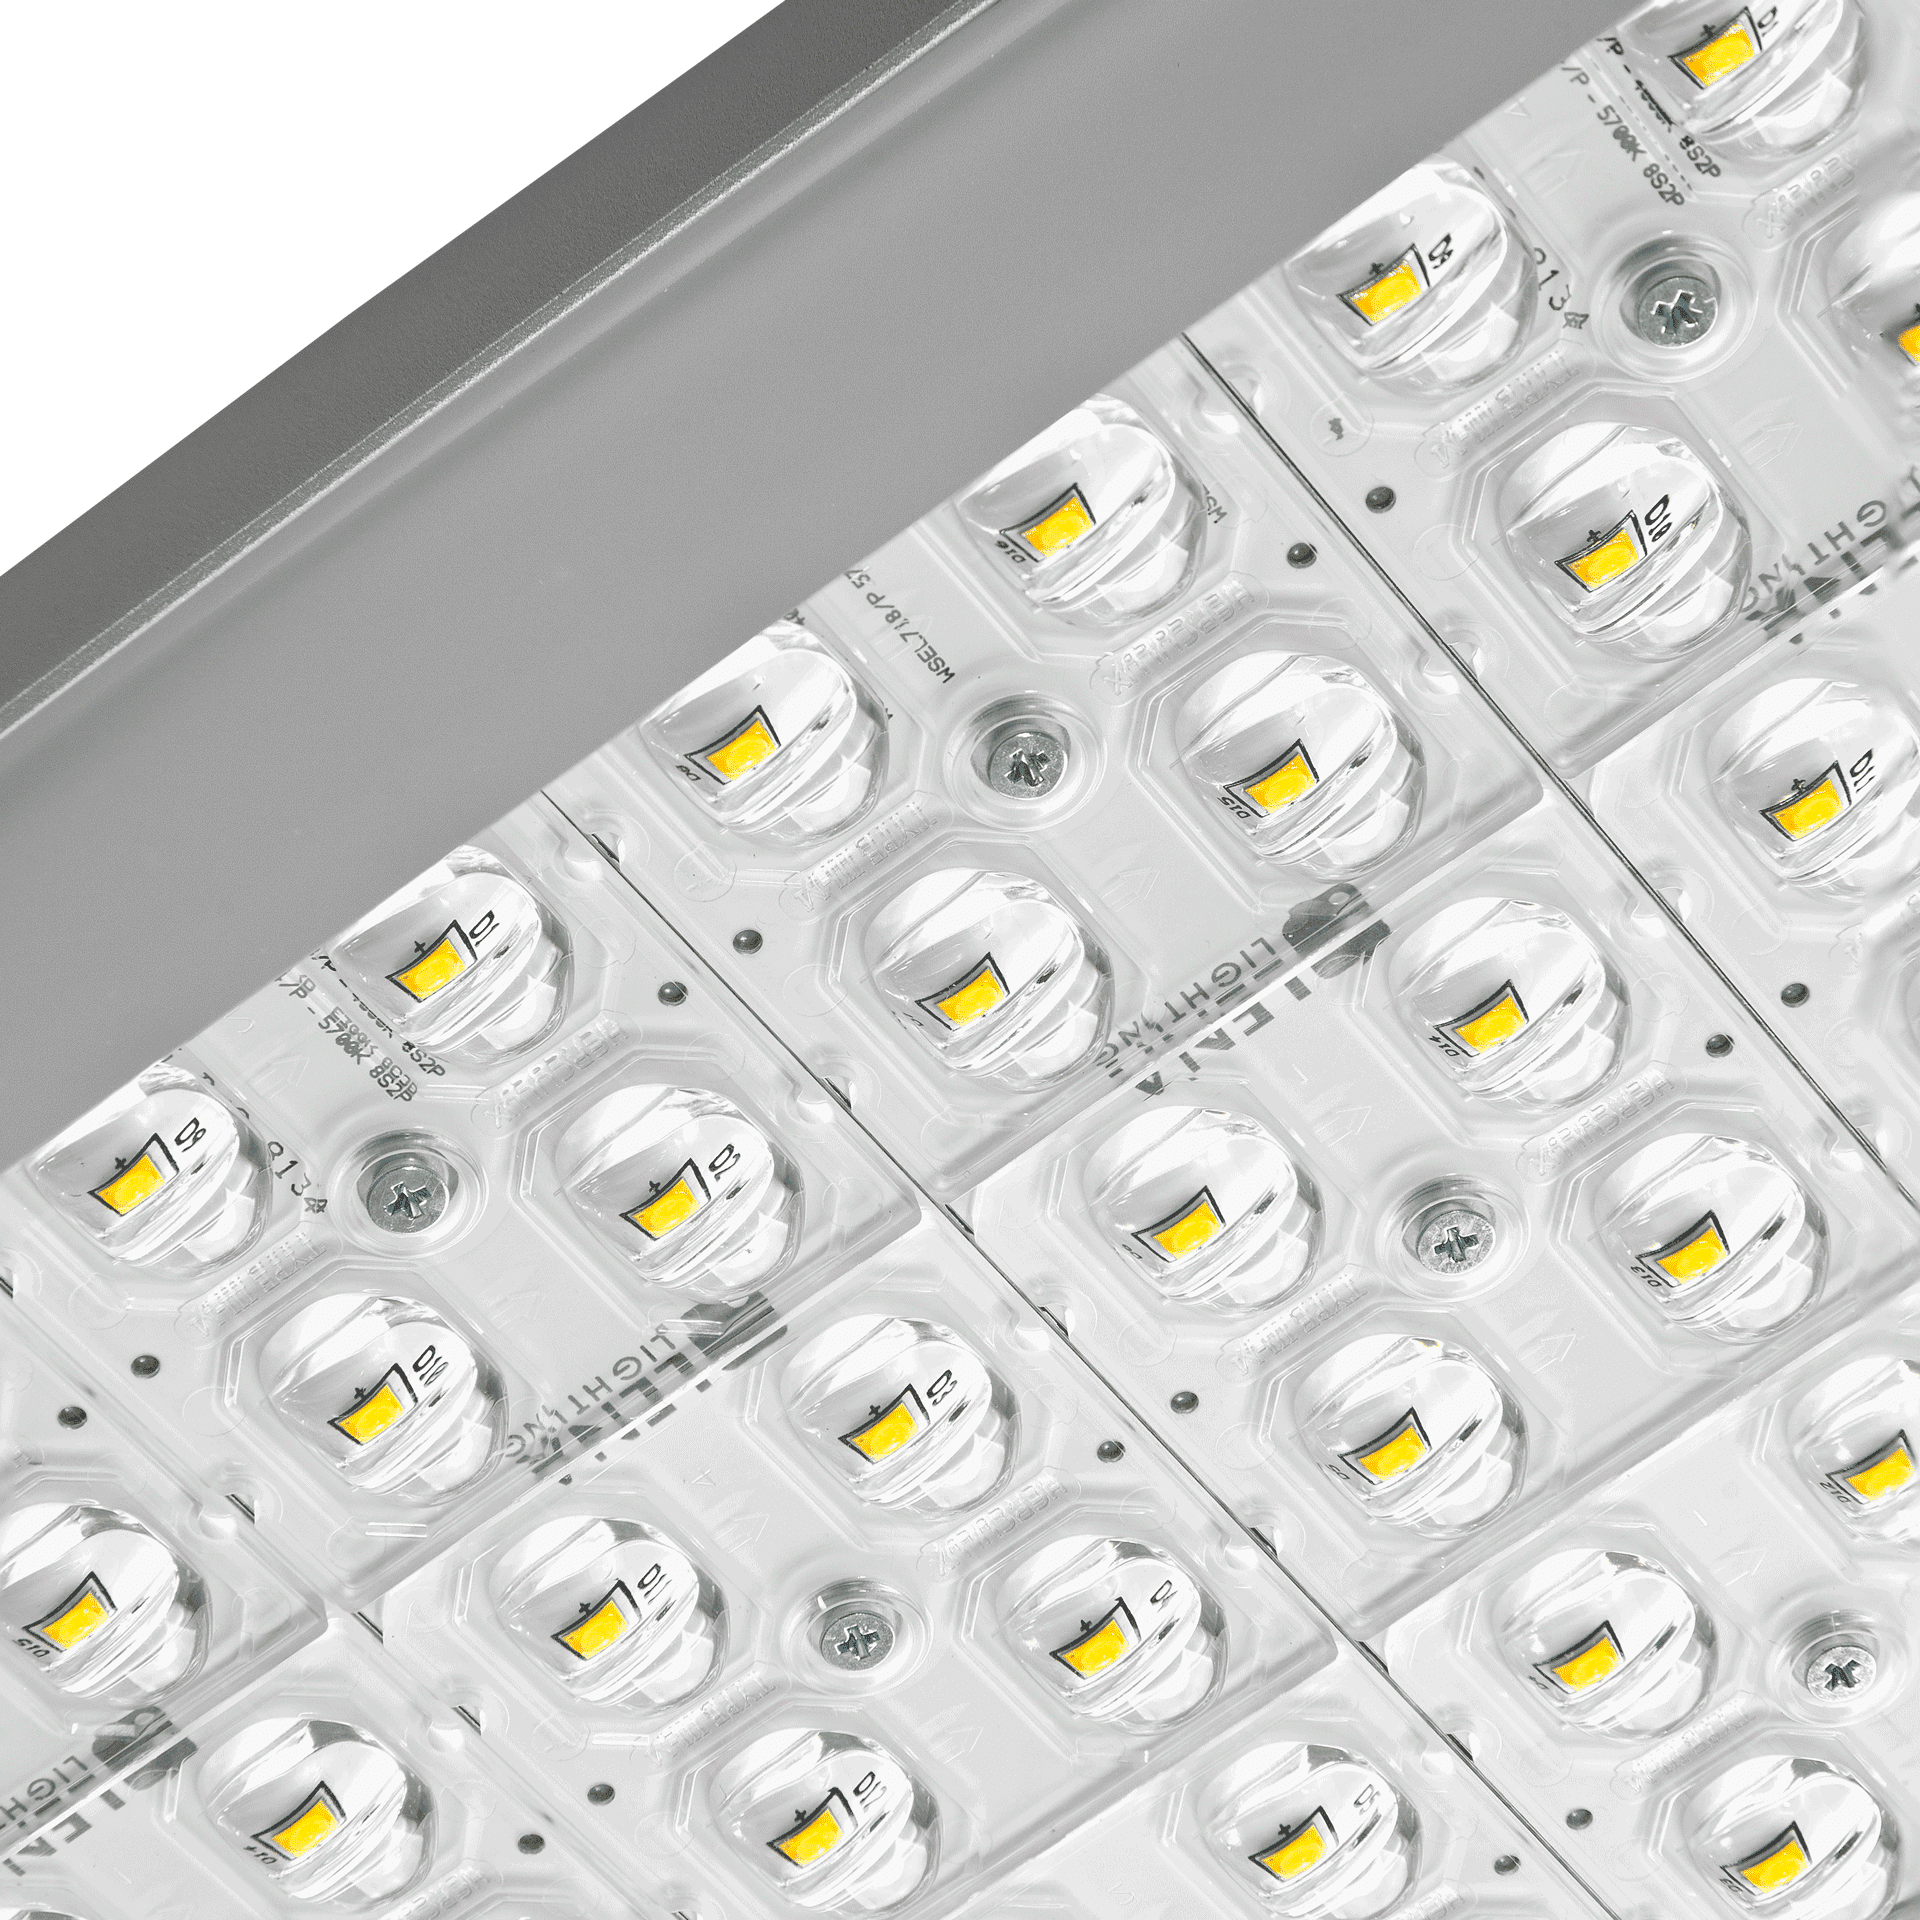 Tiara LED Clue IoT-SOCZEWKI